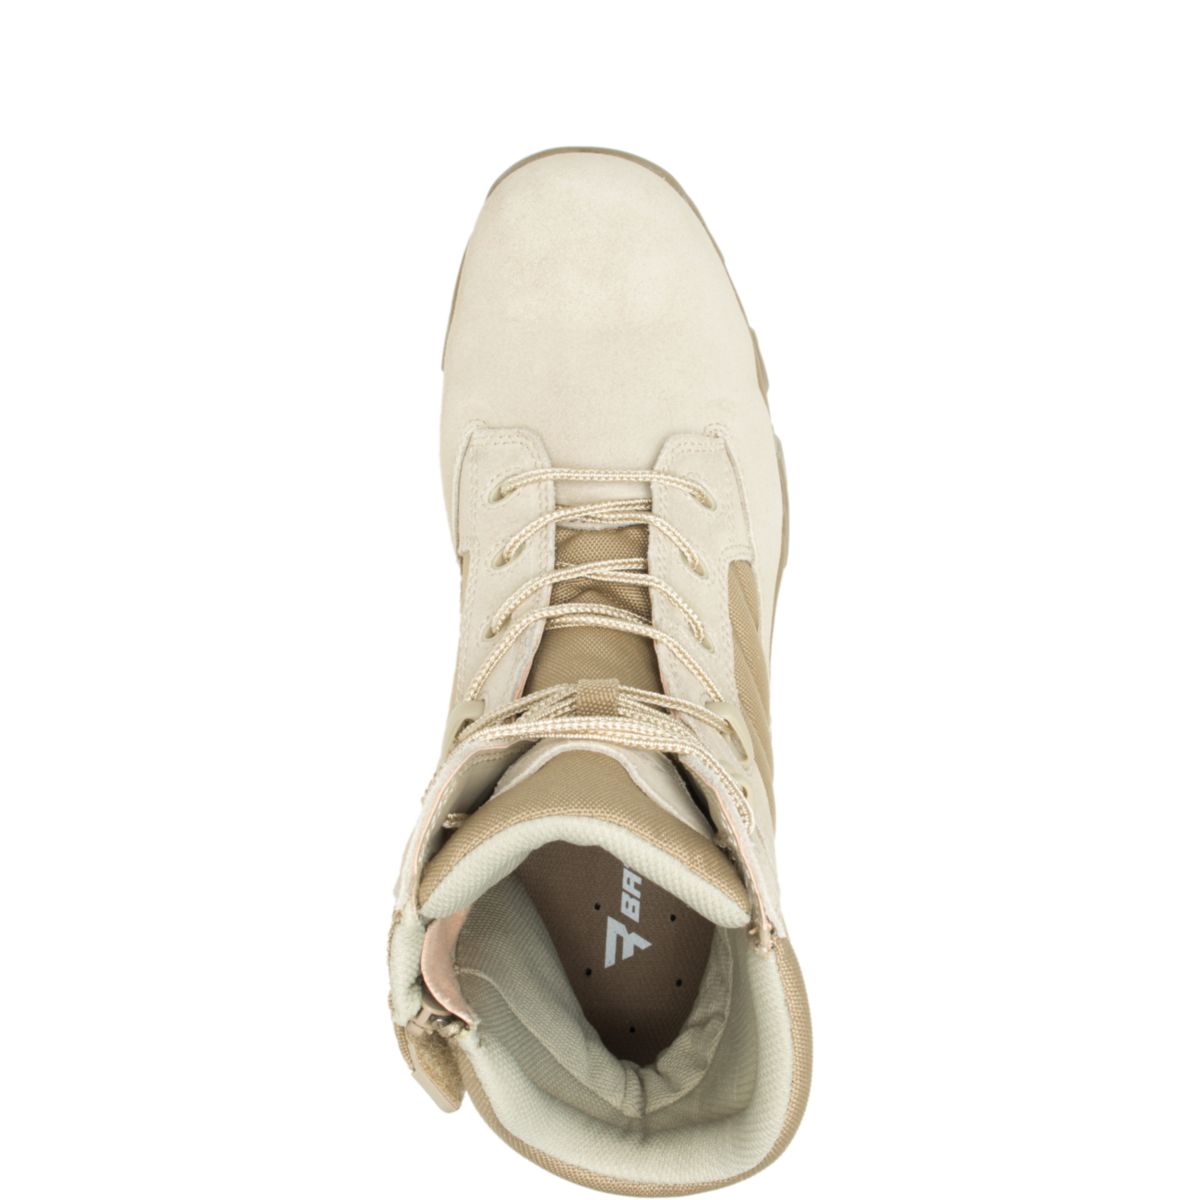 Bates Men's GX-8 Composite Toe Side-Zip Work Boot Desert Tan - E02276 - image 5 of 6